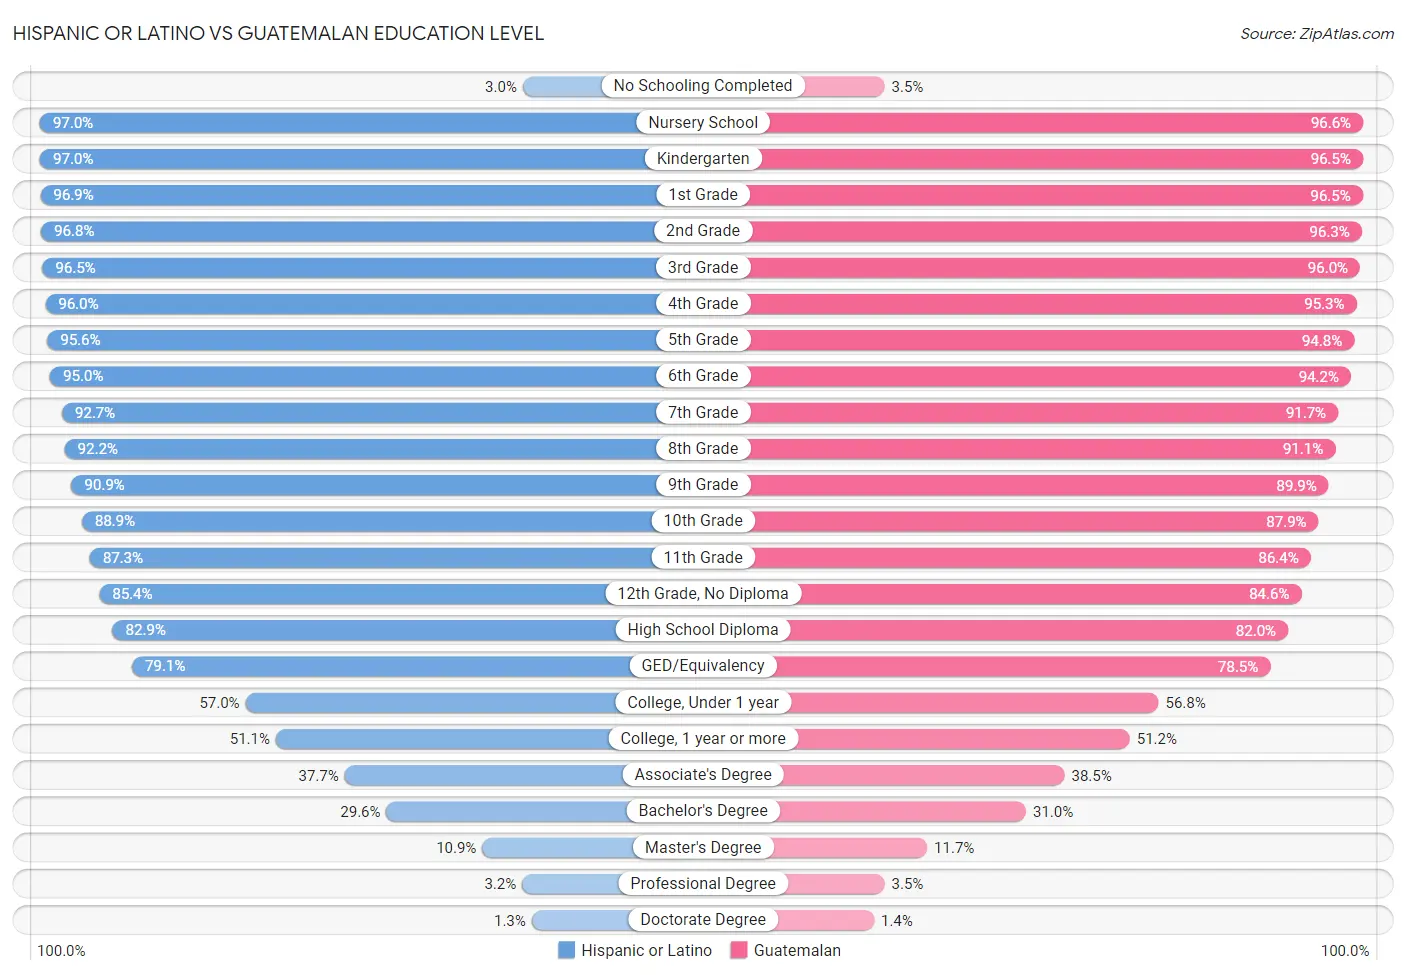 Hispanic or Latino vs Guatemalan Education Level